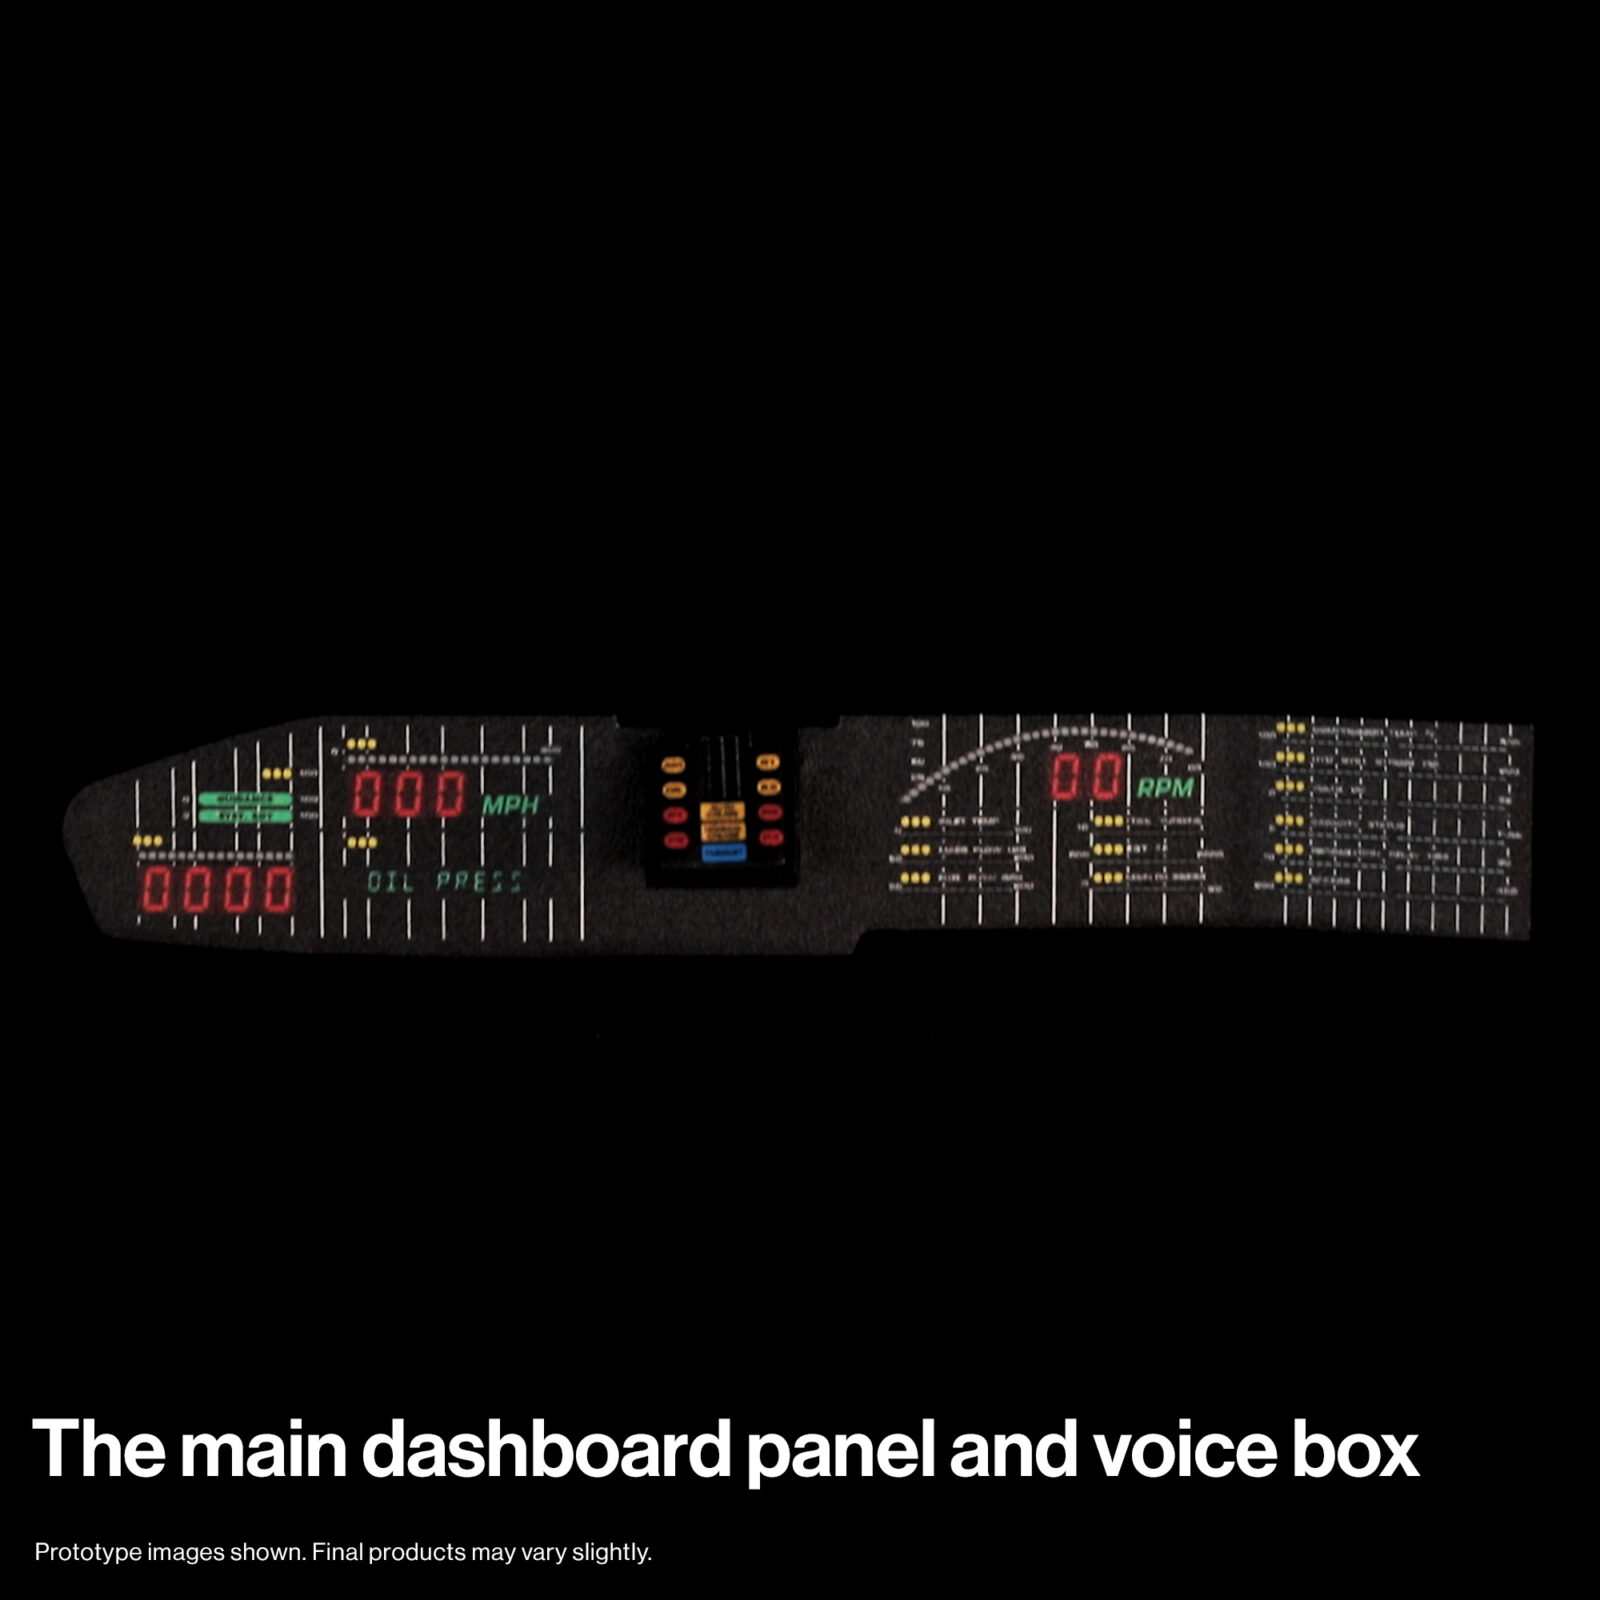 Hoofddashboardpaneel en voicebox voor KITT